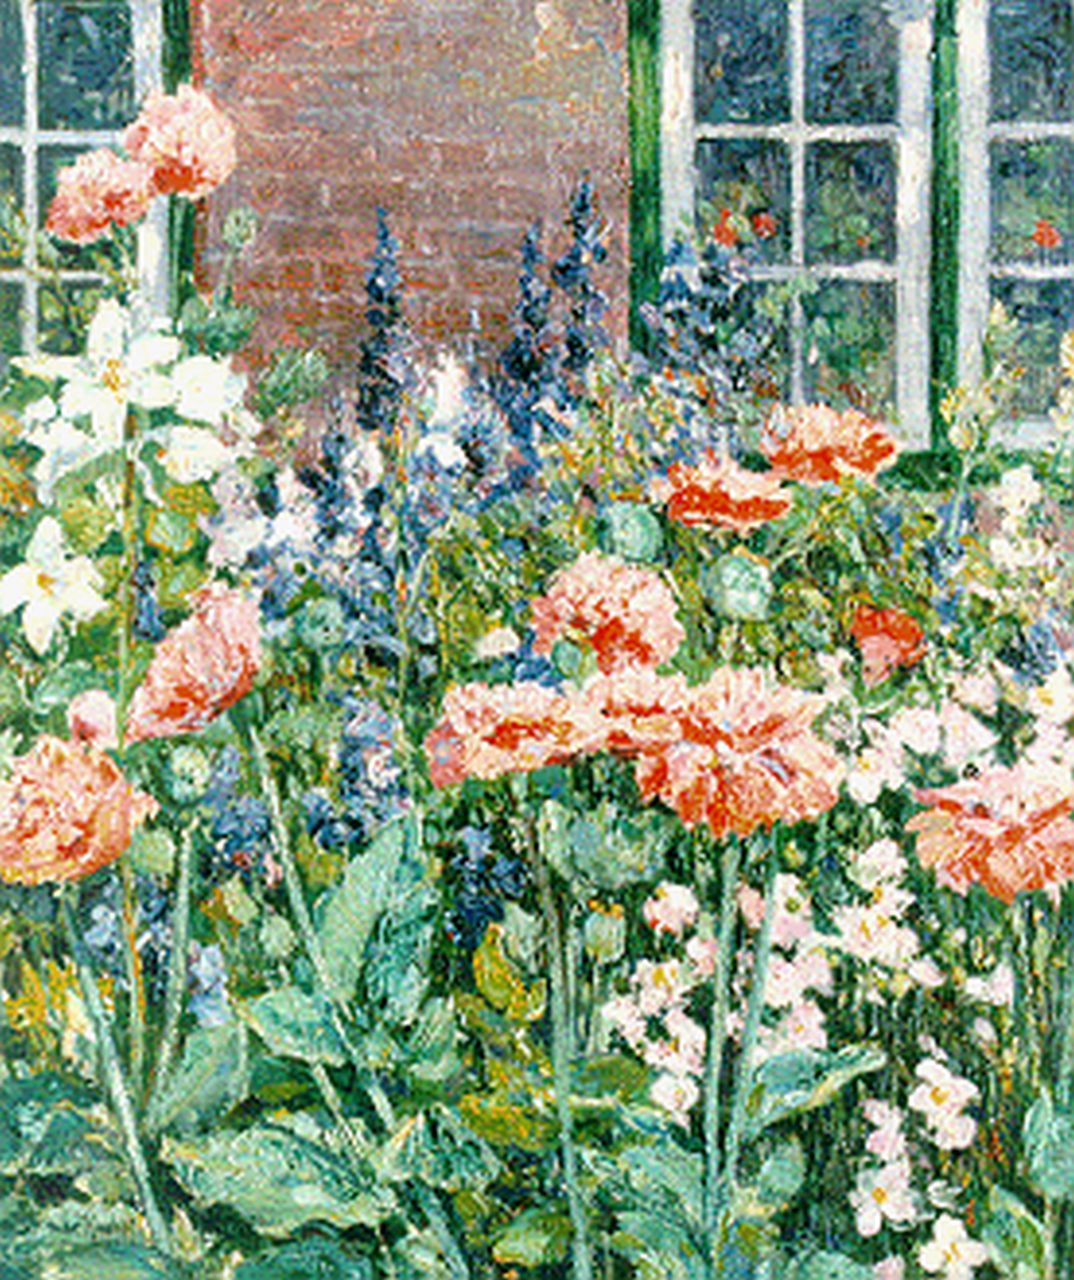 Kuchel M.  | Max Kuchel, Flower garden, oil on canvas 49.2 x 42.0 cm, signed l.l. and painted circa 1910